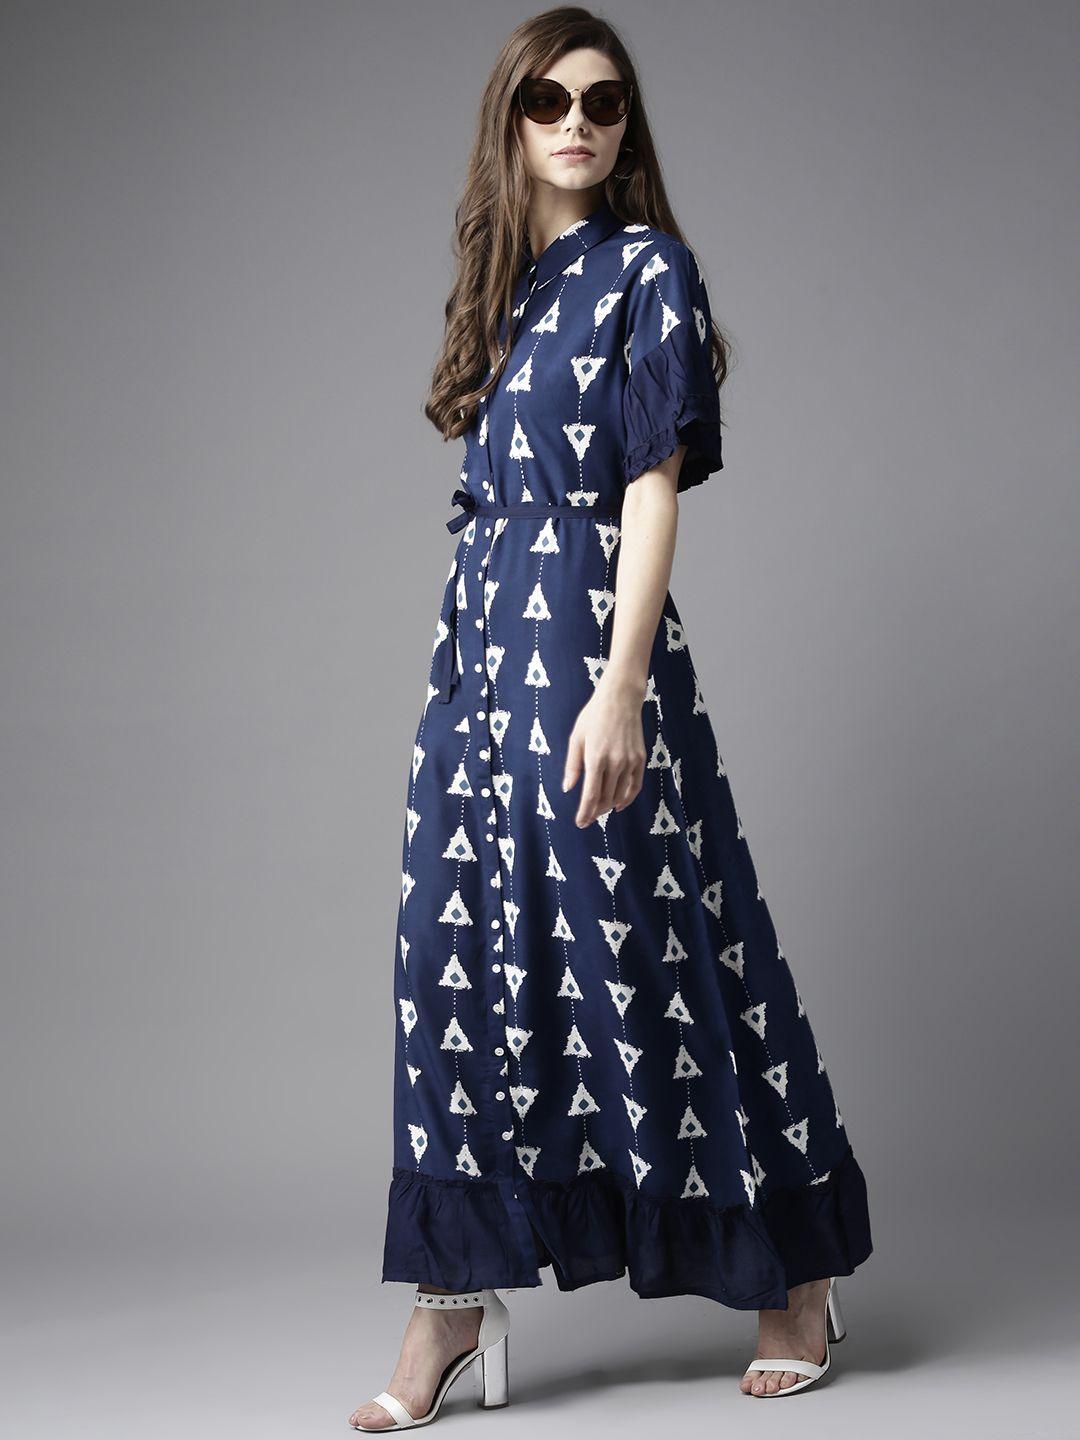 here&now-navy-blue-&-white-geometric-printed-maxi-shirt-dress